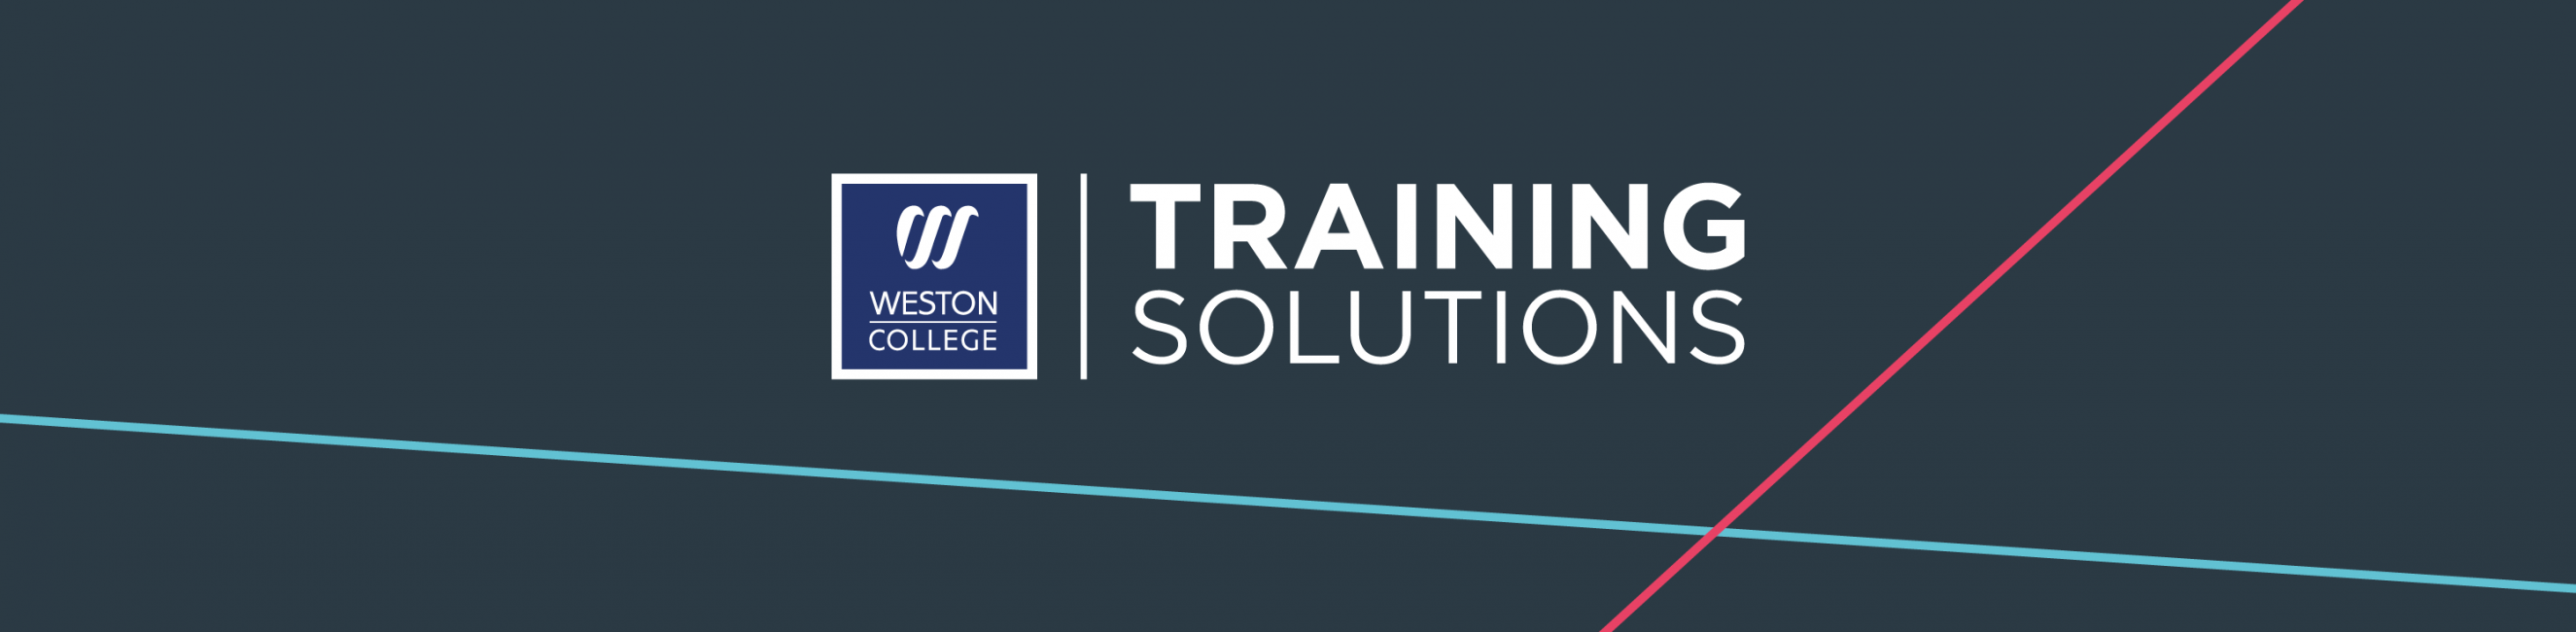 Weston College Training Solutions 